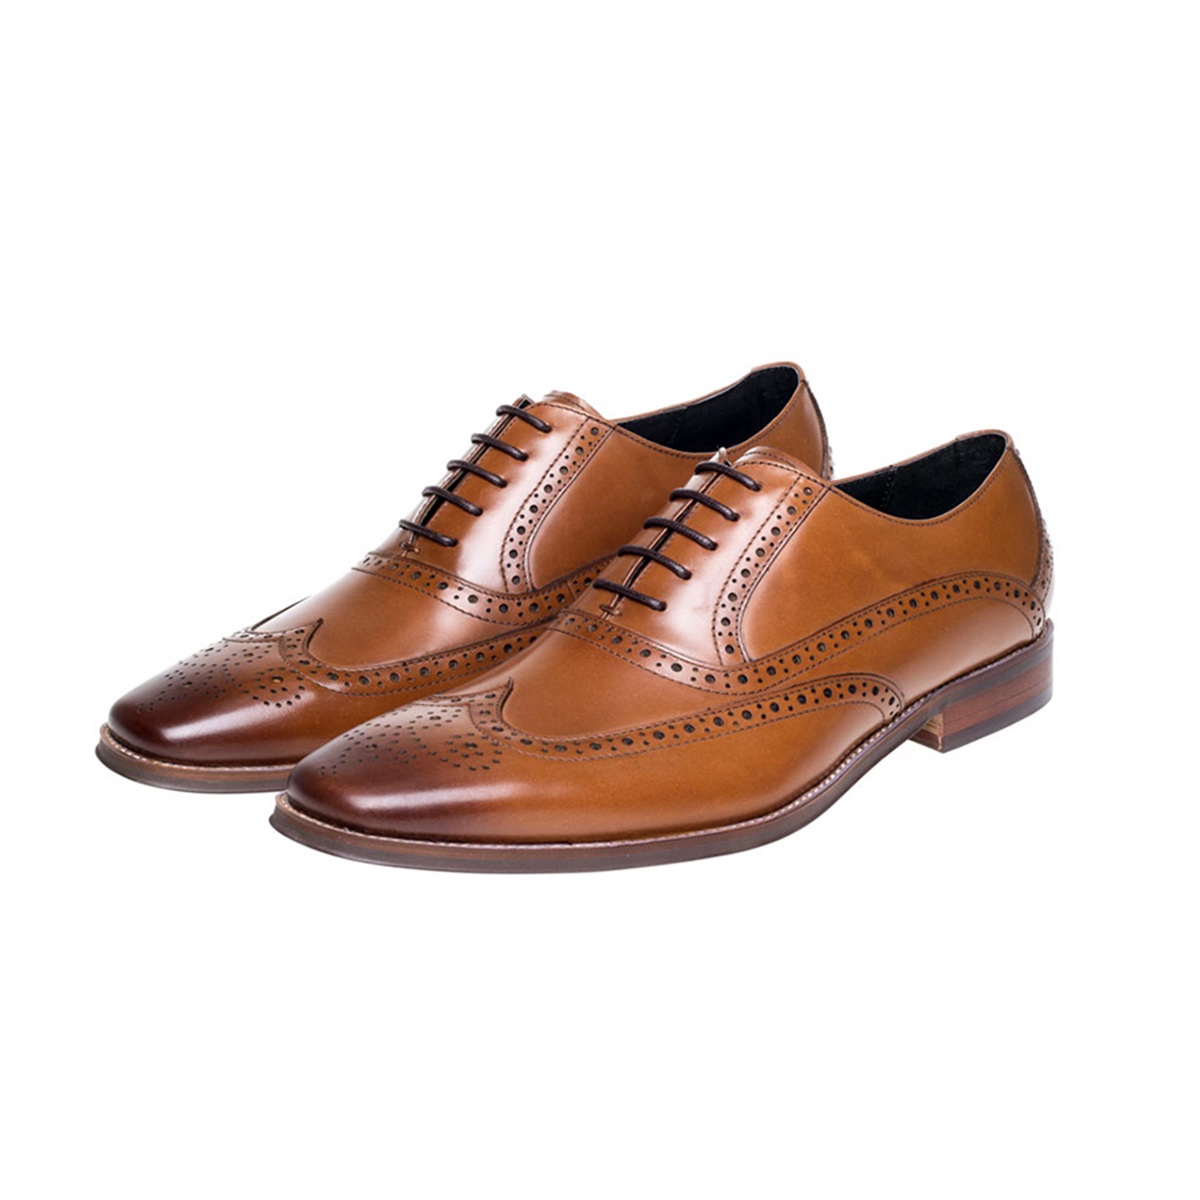 Men's John White Hercules Brogue Oxford Leather Shoes - Tan